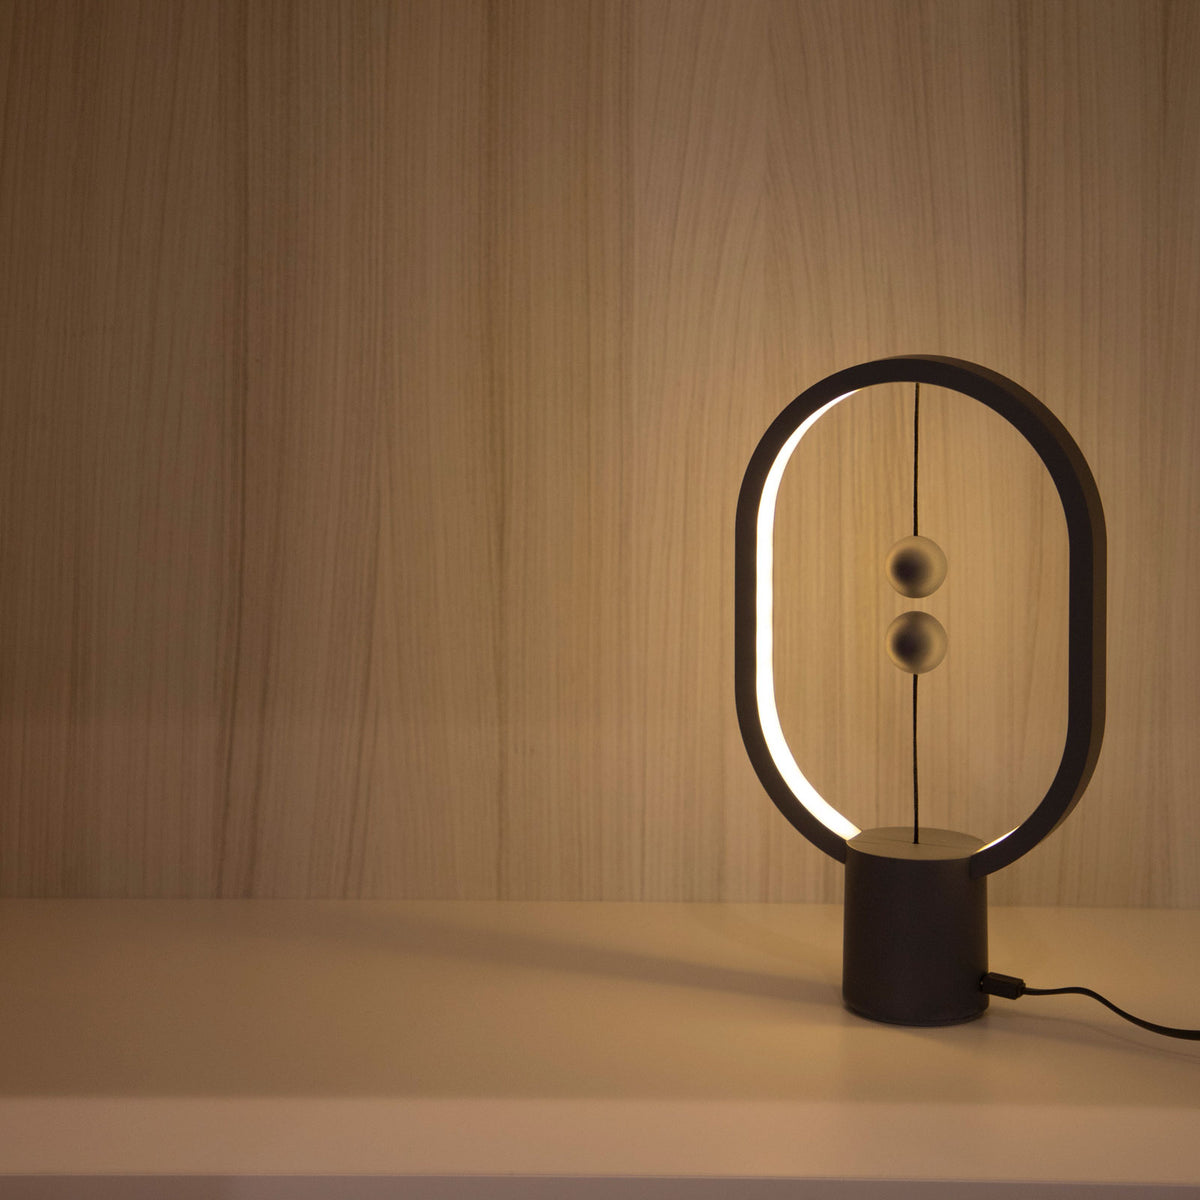 A lit Mini Heng Balance Lamp in a room&#39;s corner.